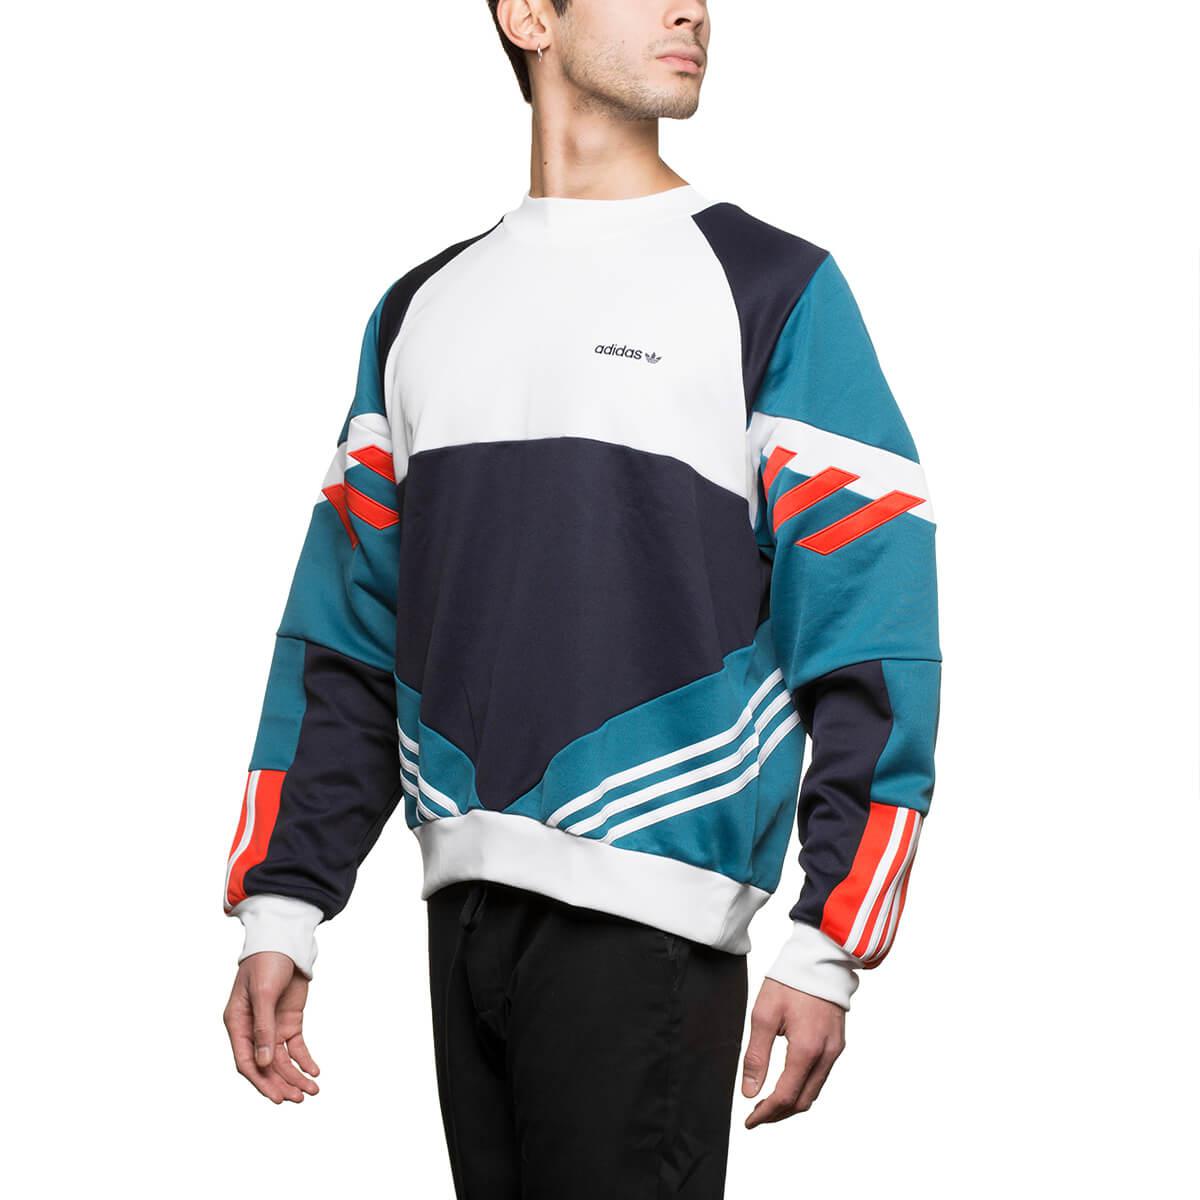 adidas Originals Chop Shop Sweatshirt in Blue for Men - Lyst